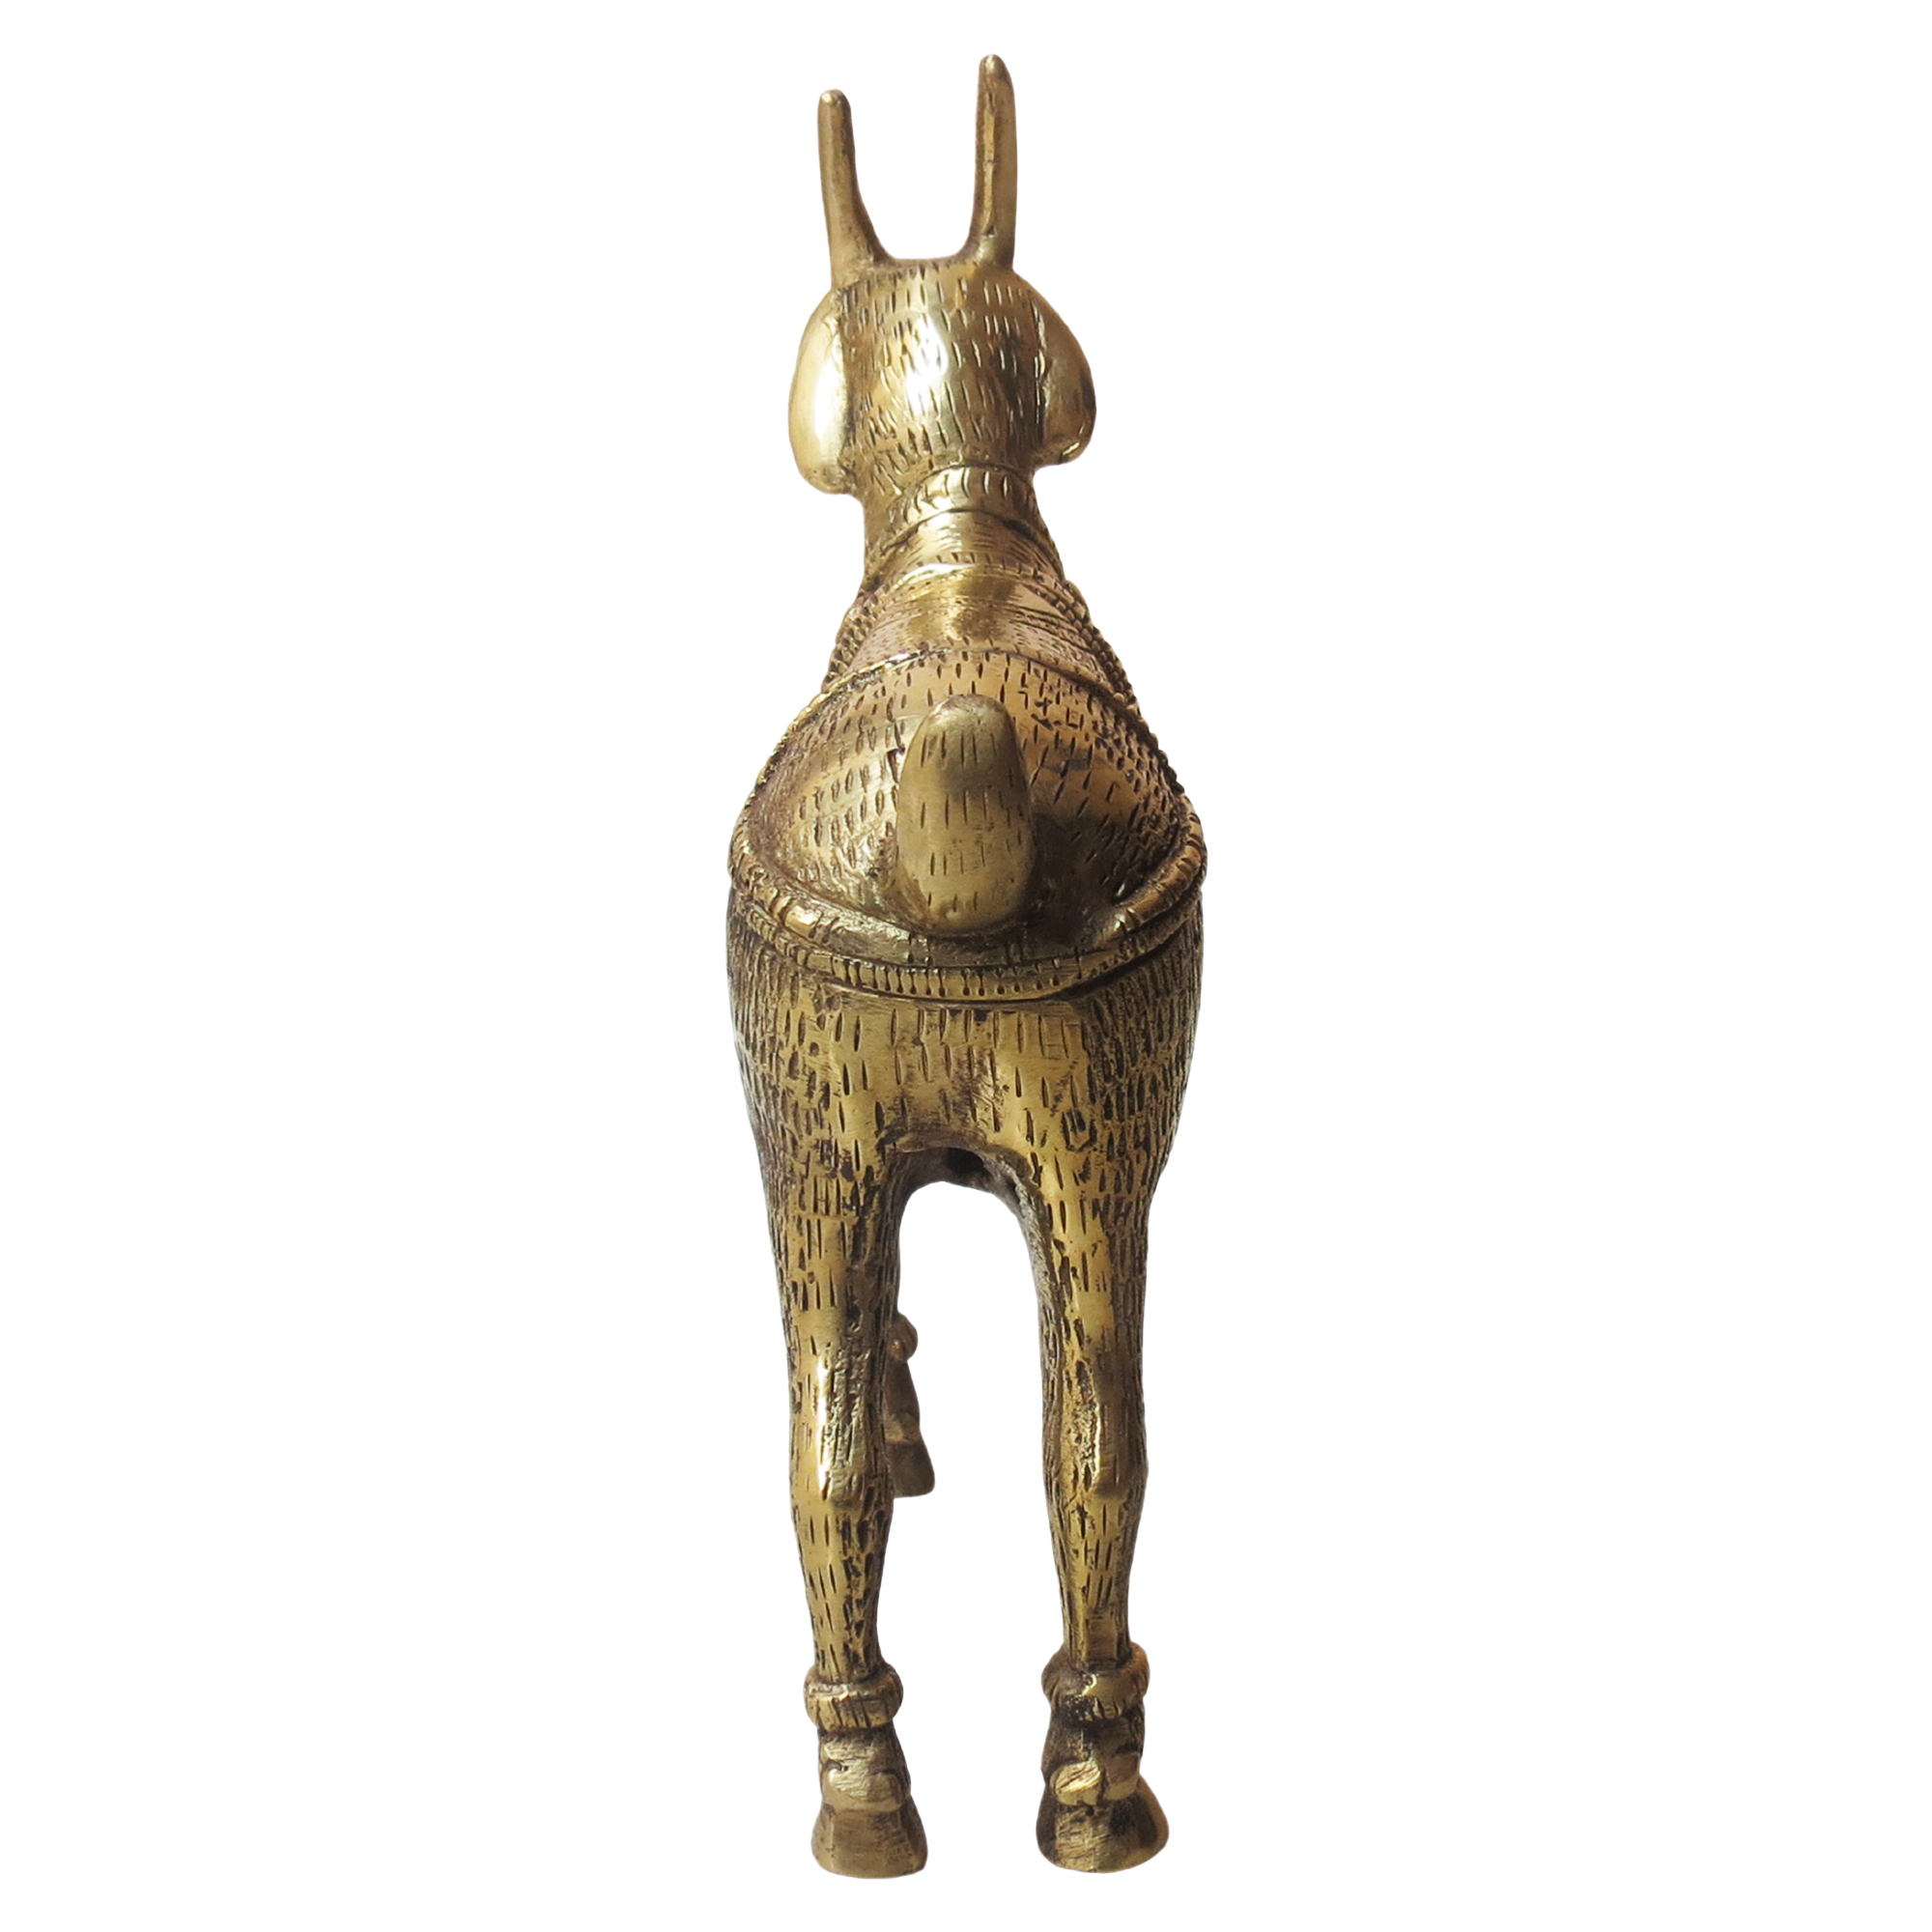 BHARAT HAAT Brass Goat (Meldi MATA Vahan) Medium Statue Handicraft Art by  BharatHaat BH07111